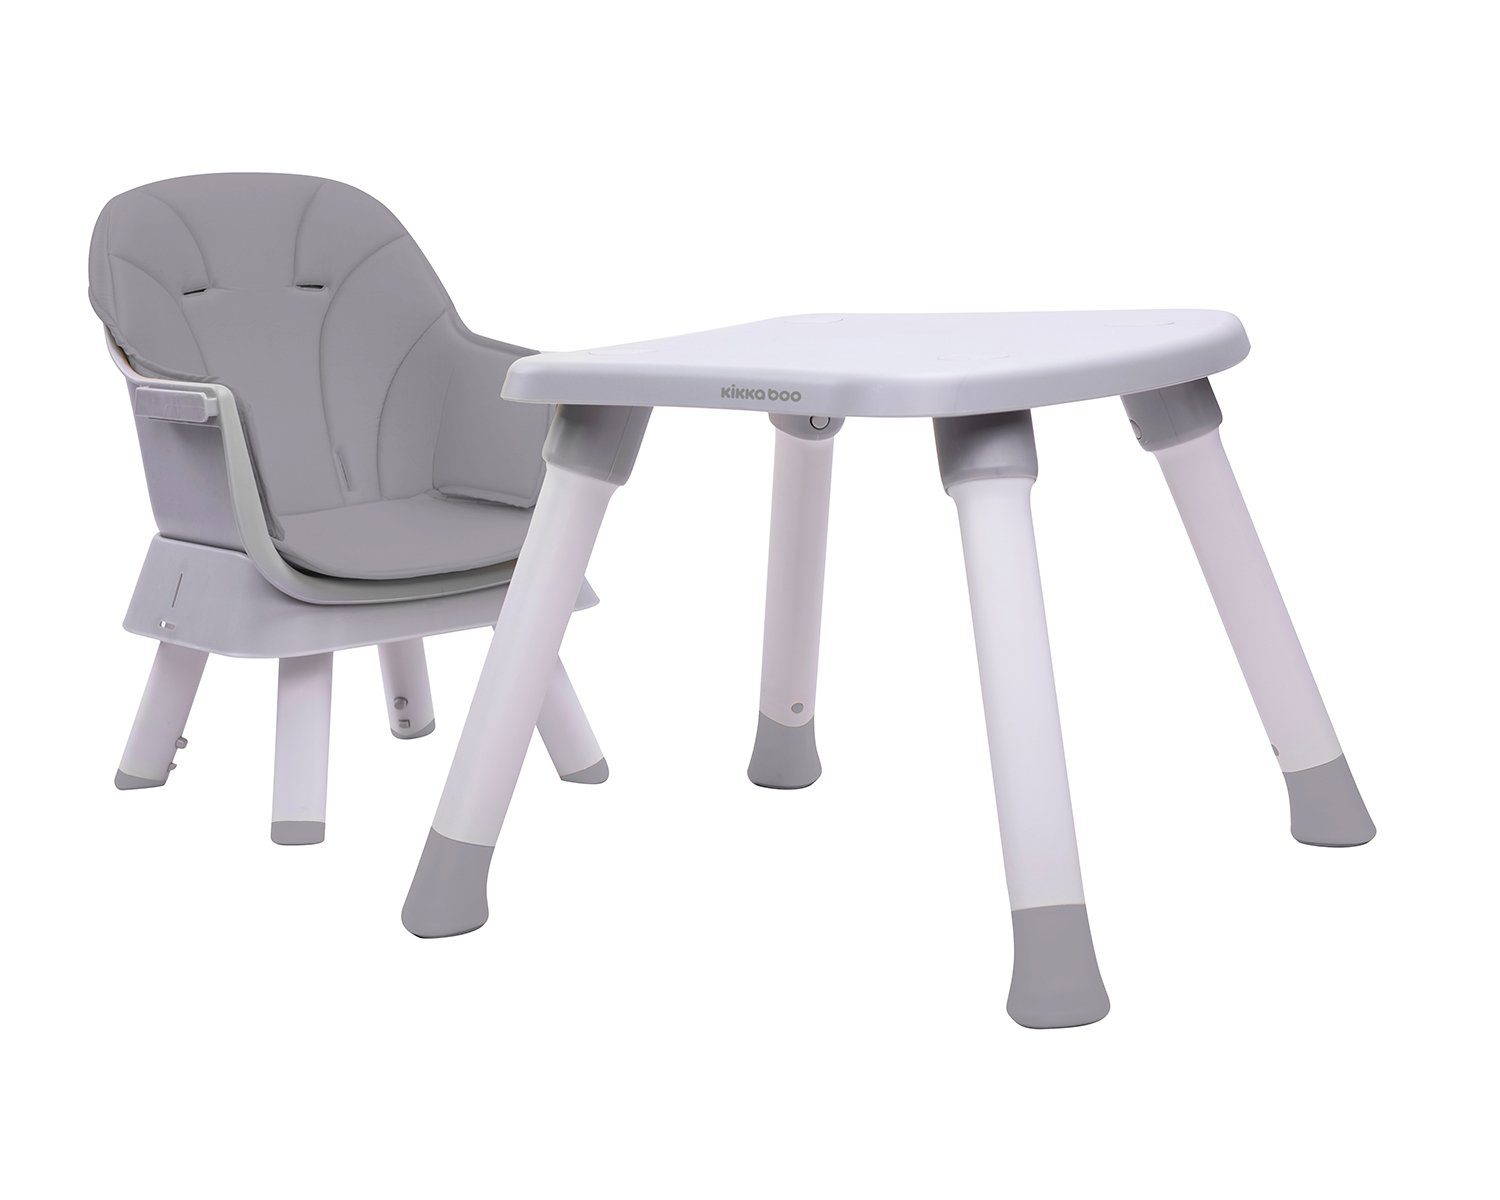 Kikkaboo Hochstuhl in Kinderstuhl 1 Tablett Spieltisch Eat´n 6 grau play, Gurt Kinderhochstuhl